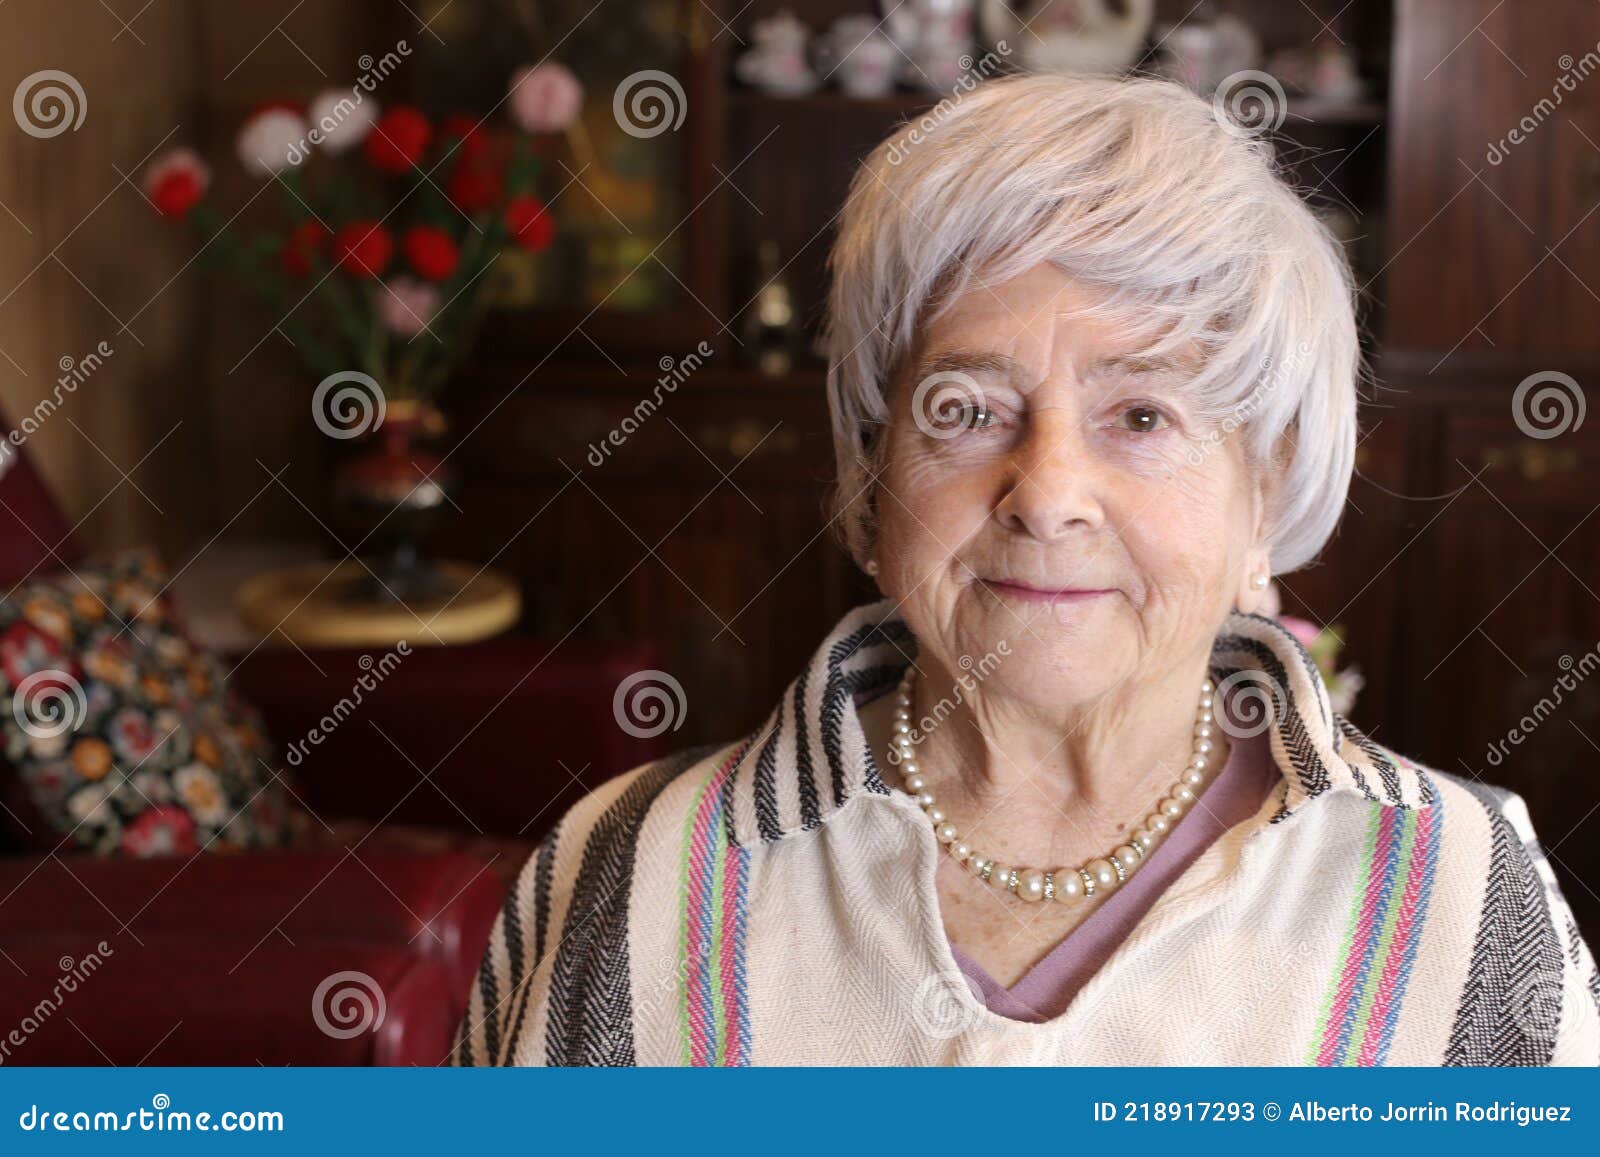 senior hispanic woman wearing a ruana